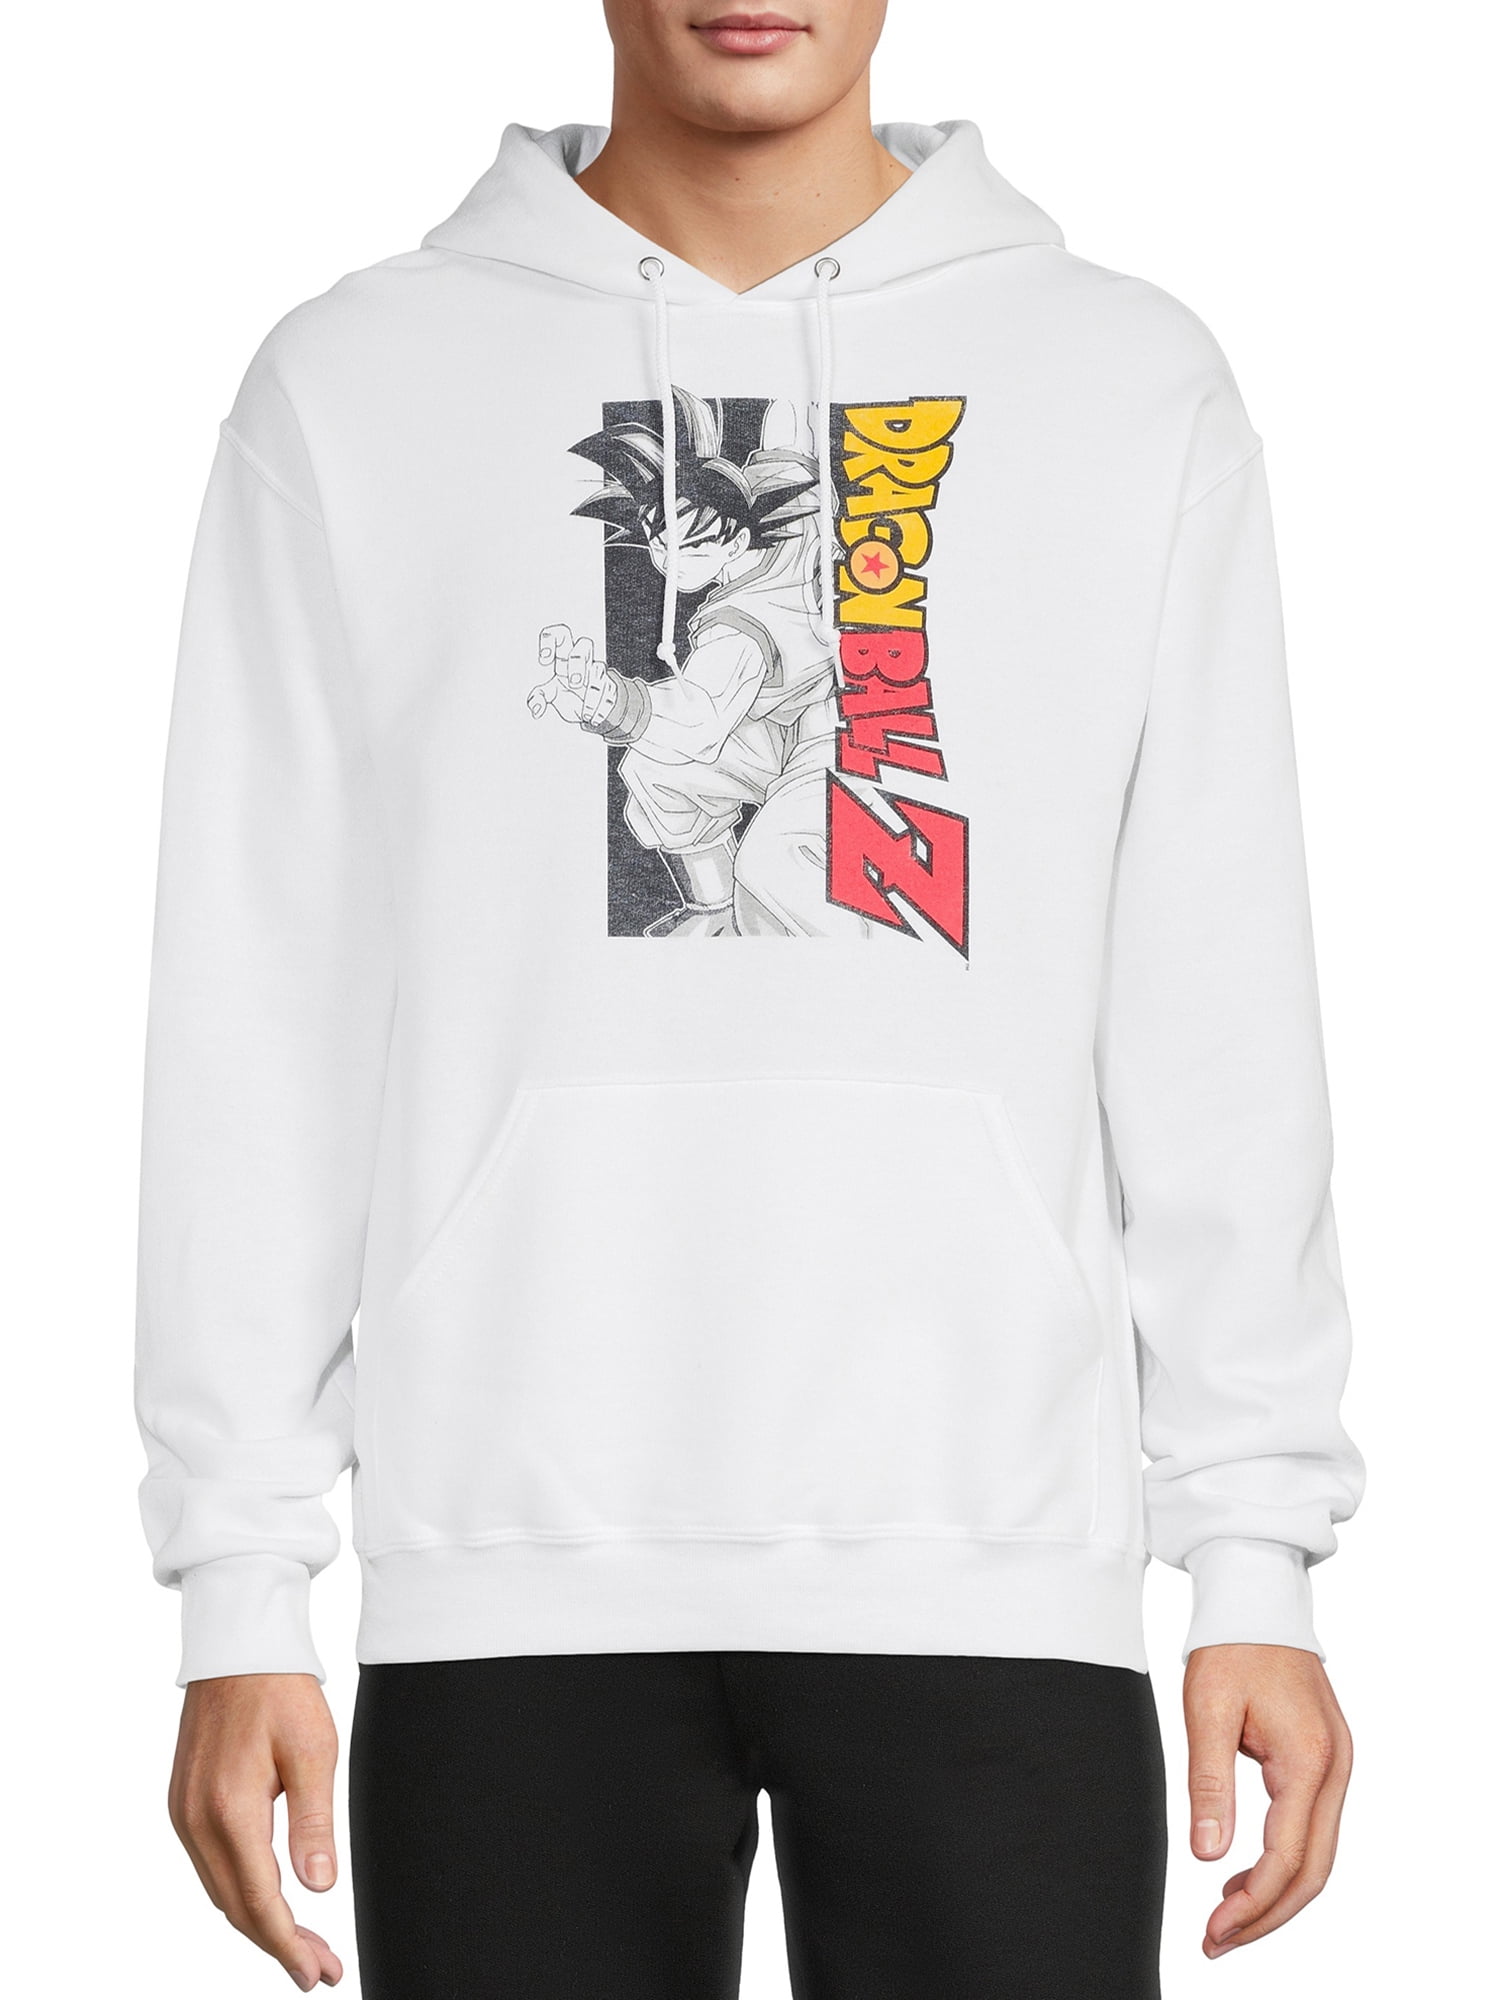 Dragon Ball Z Men's & Big Men's Graphic Hoodie Sweatshirt with Long ...